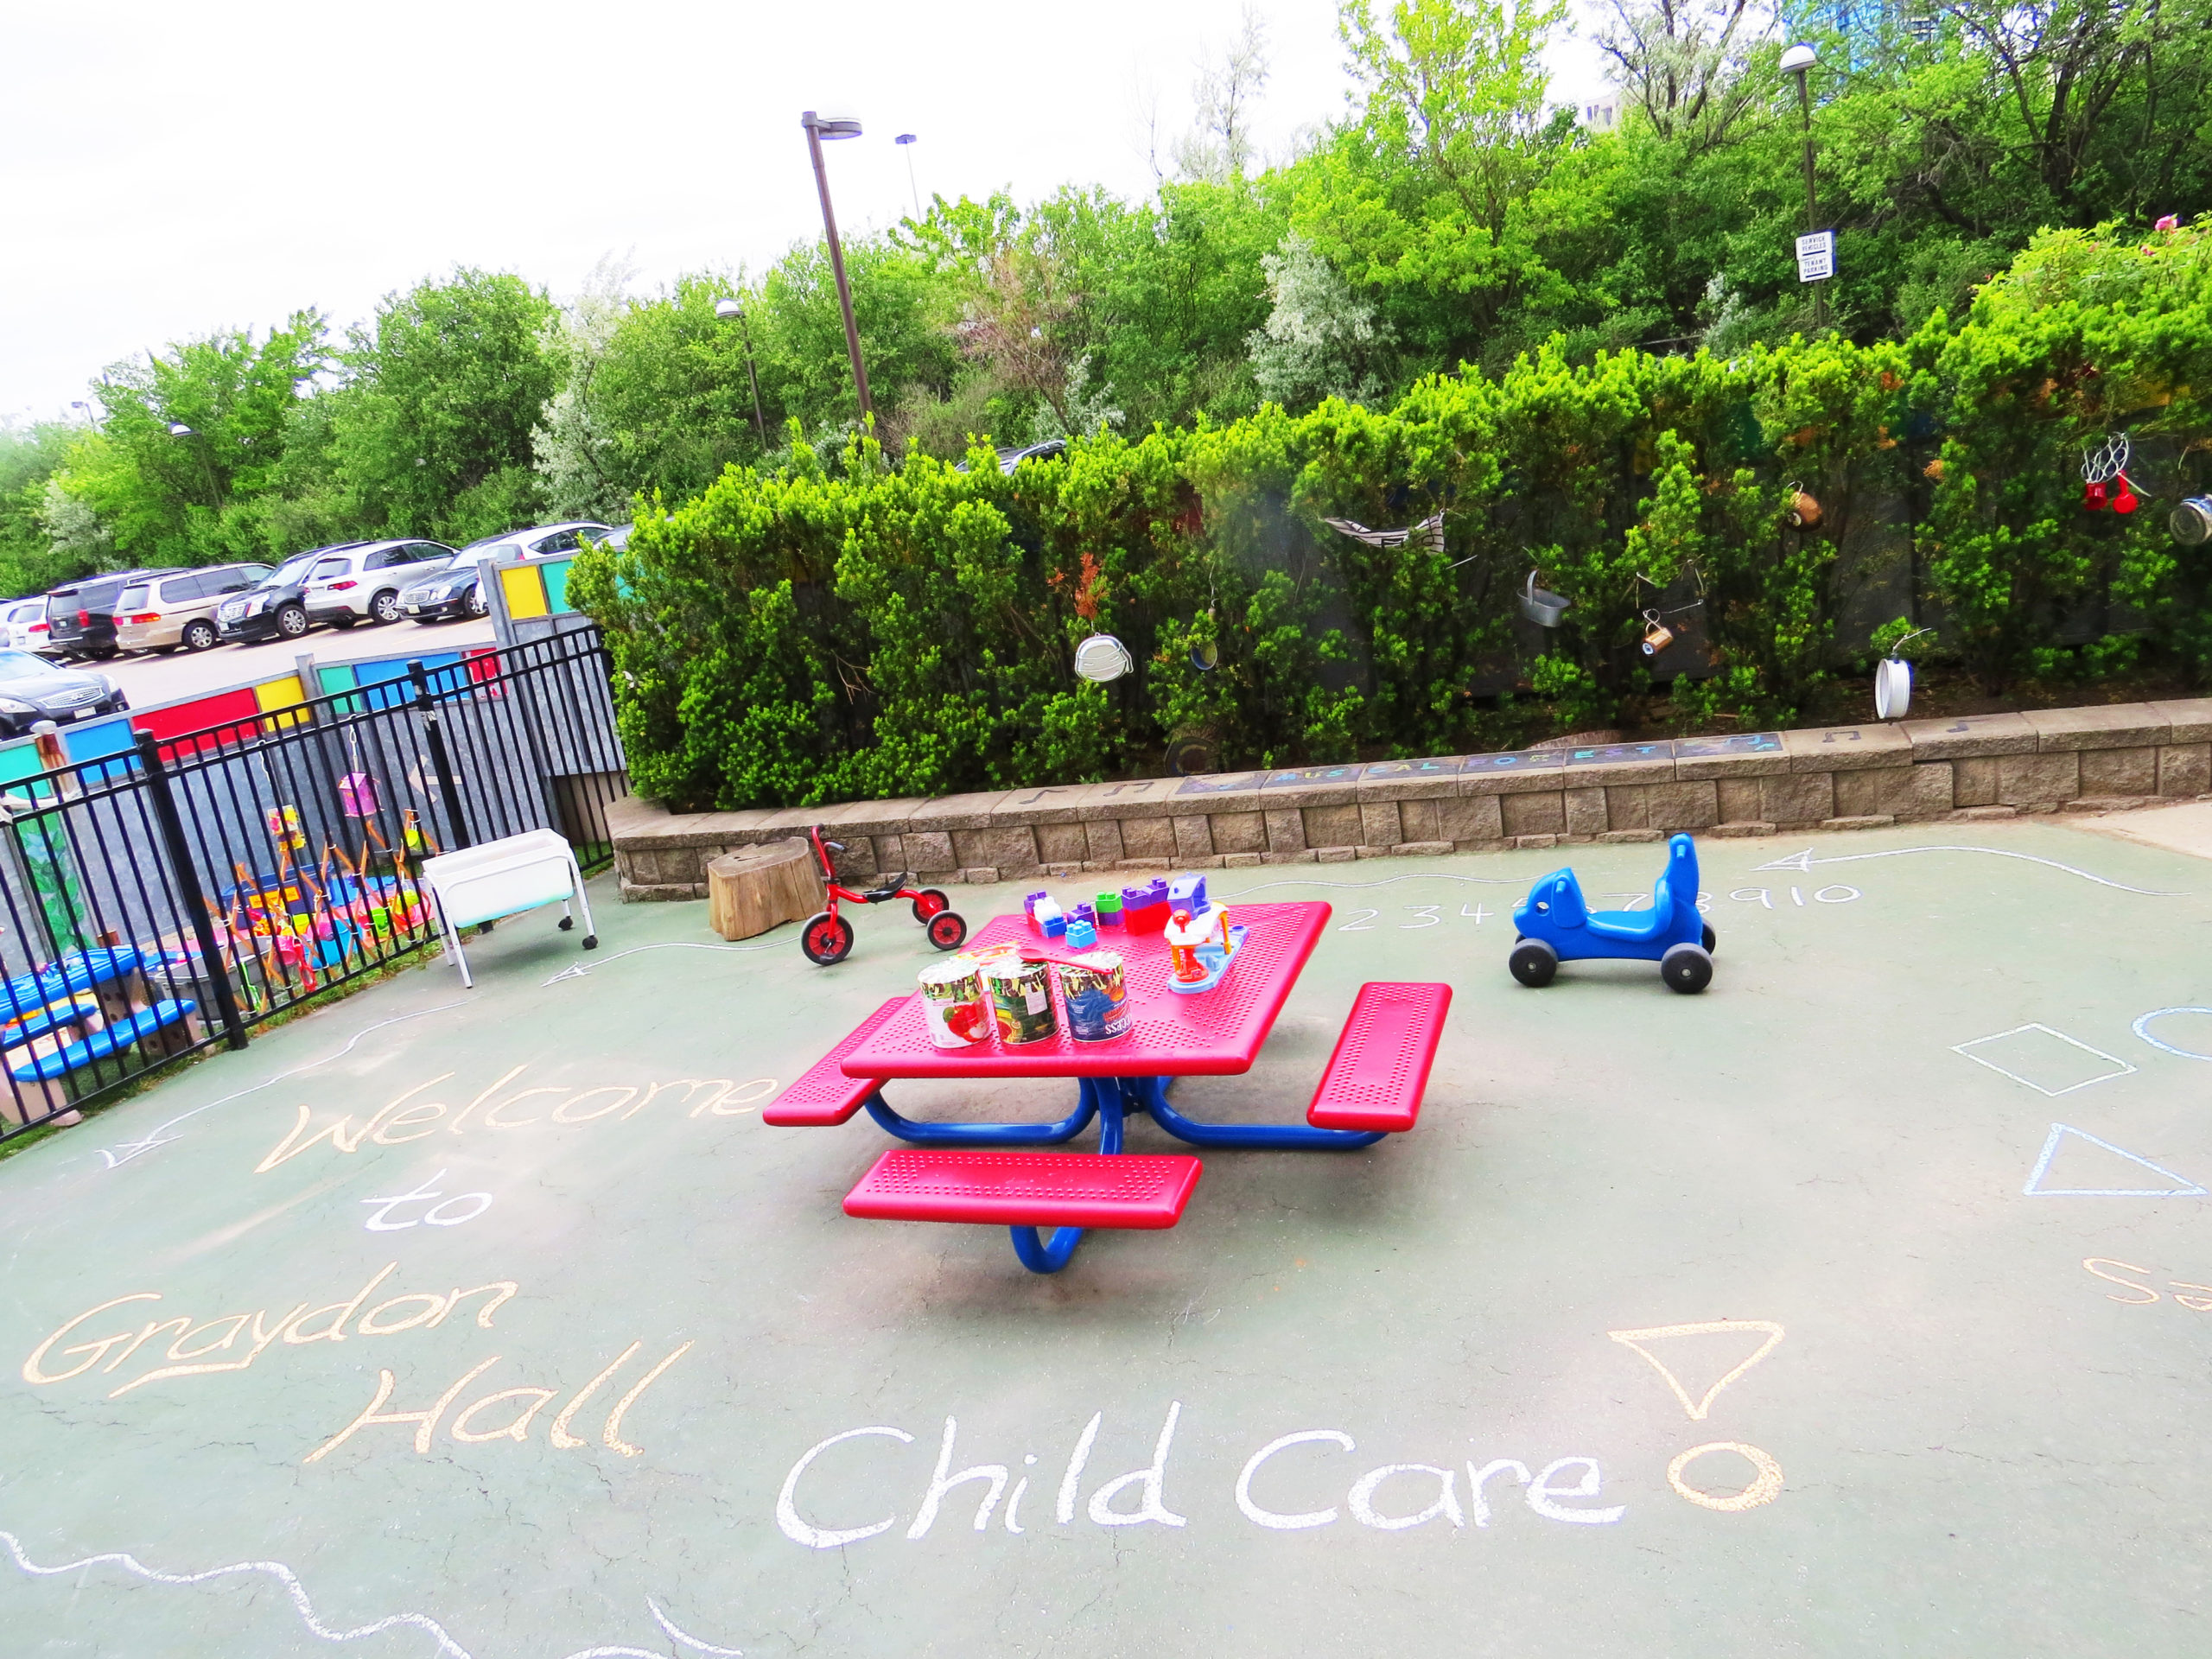 Graydon Hall Child Care Services